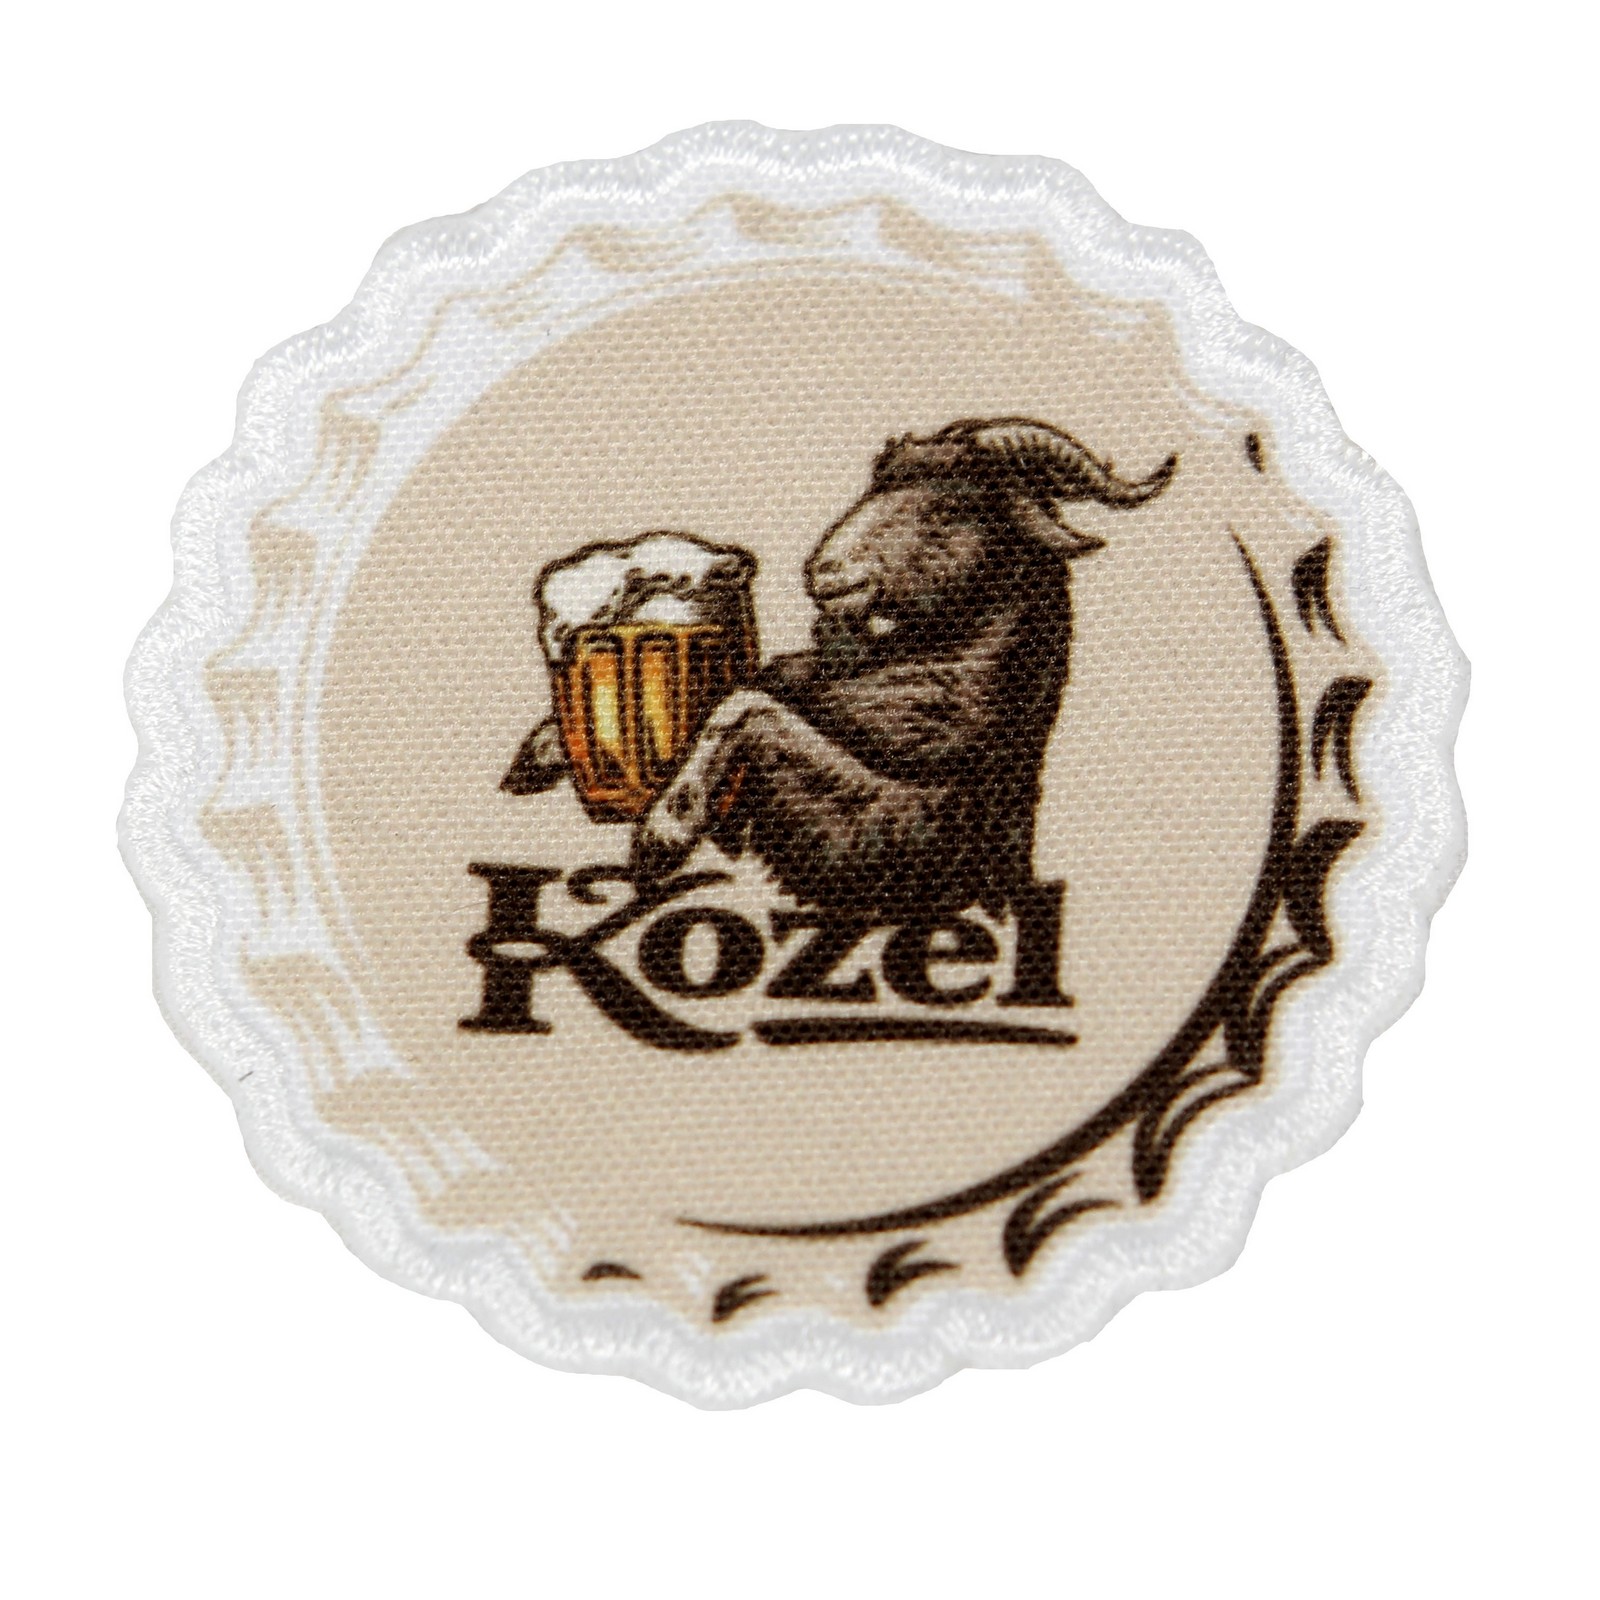 Iron-on patch Kozel cork (cap)